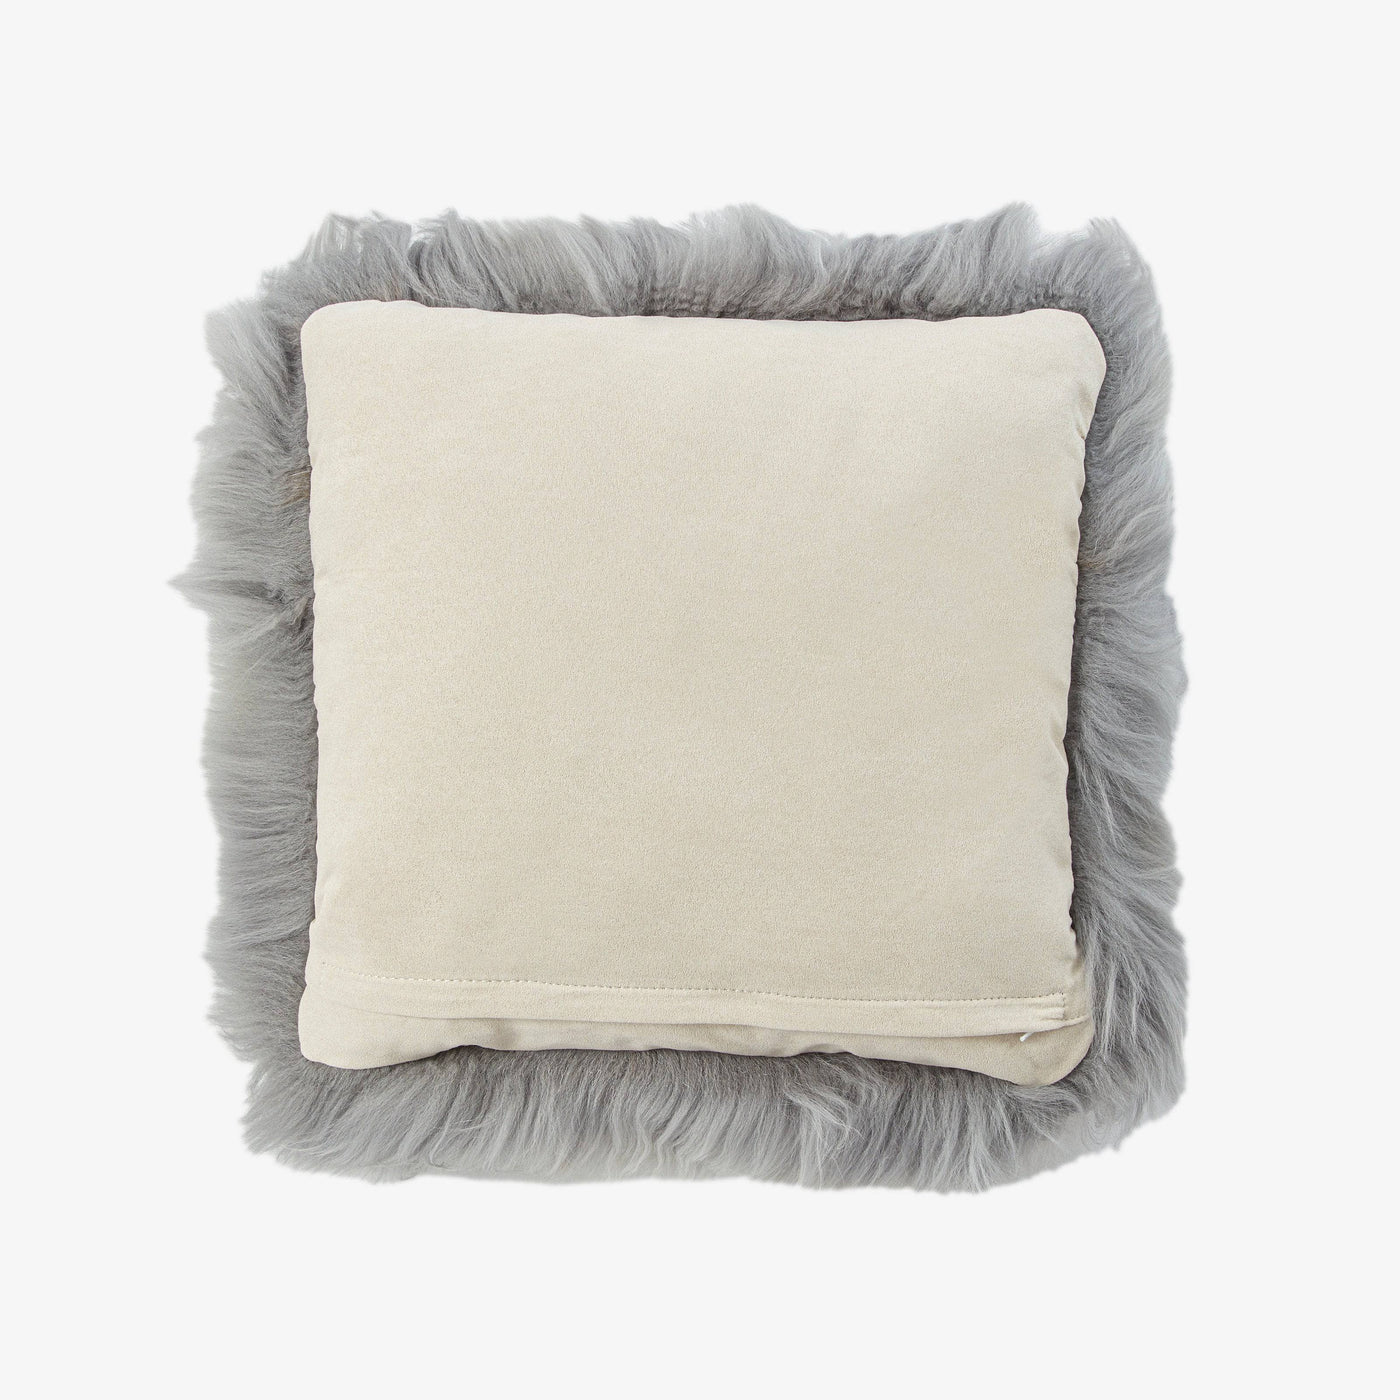 Follois Sheepskin Cushion, Grey, 40x40 cm Cushions sazy.com